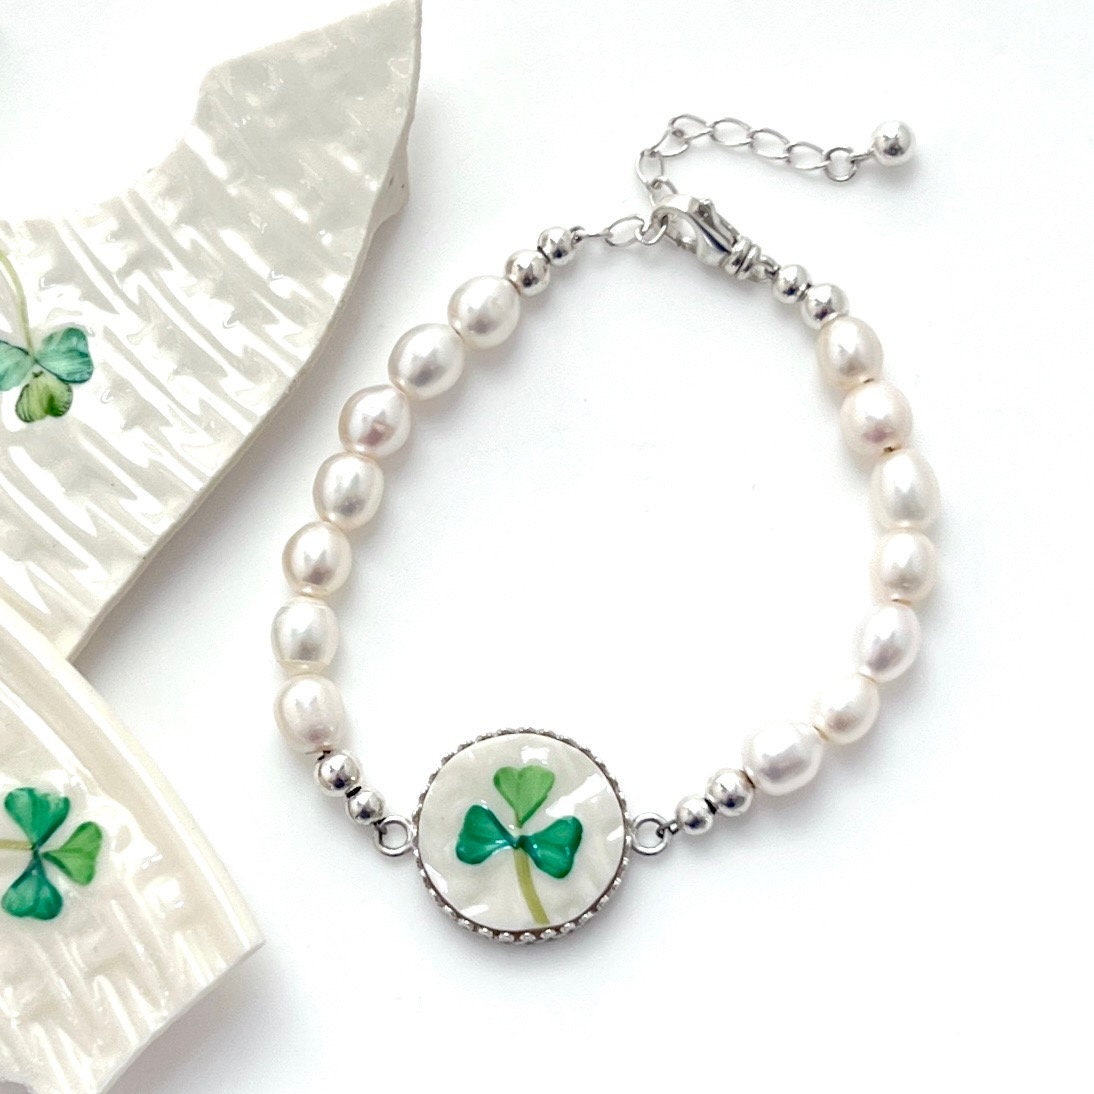 Irish Belleek China, Freshwater Pearl Bracelet, Broken China Jewelry, Unique Handmade Gifts for Women